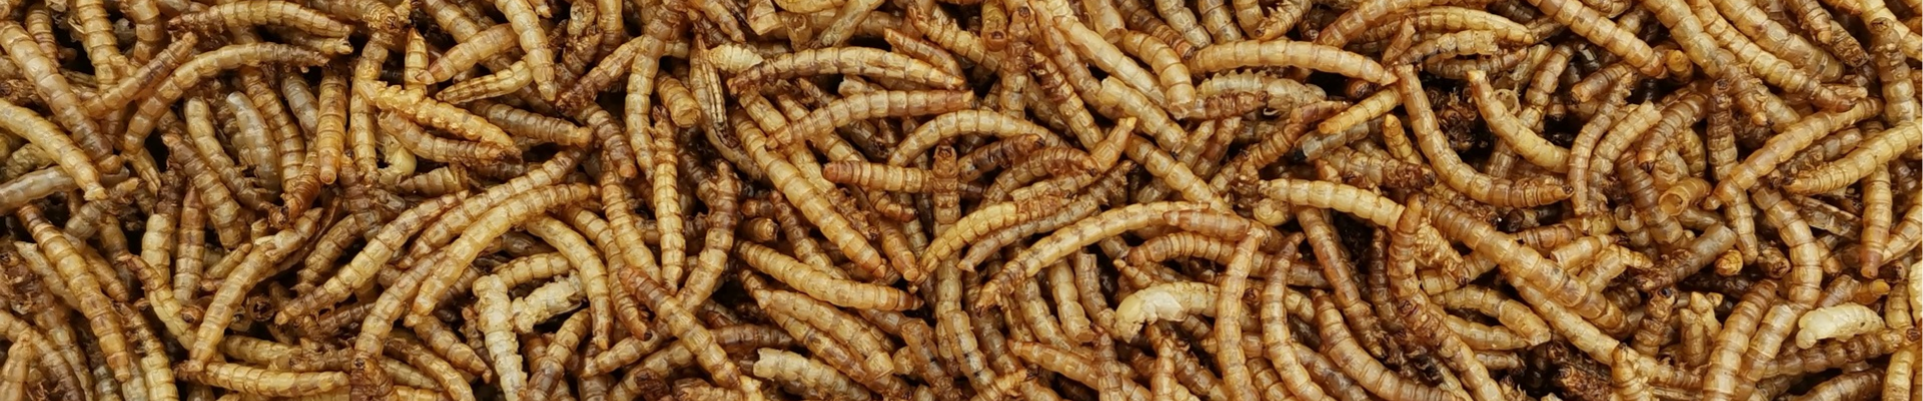 Öster­reich: Offe­ner Brief an Minis­ter Rauch zu Insek­ten­mehl in Lebensmitteln